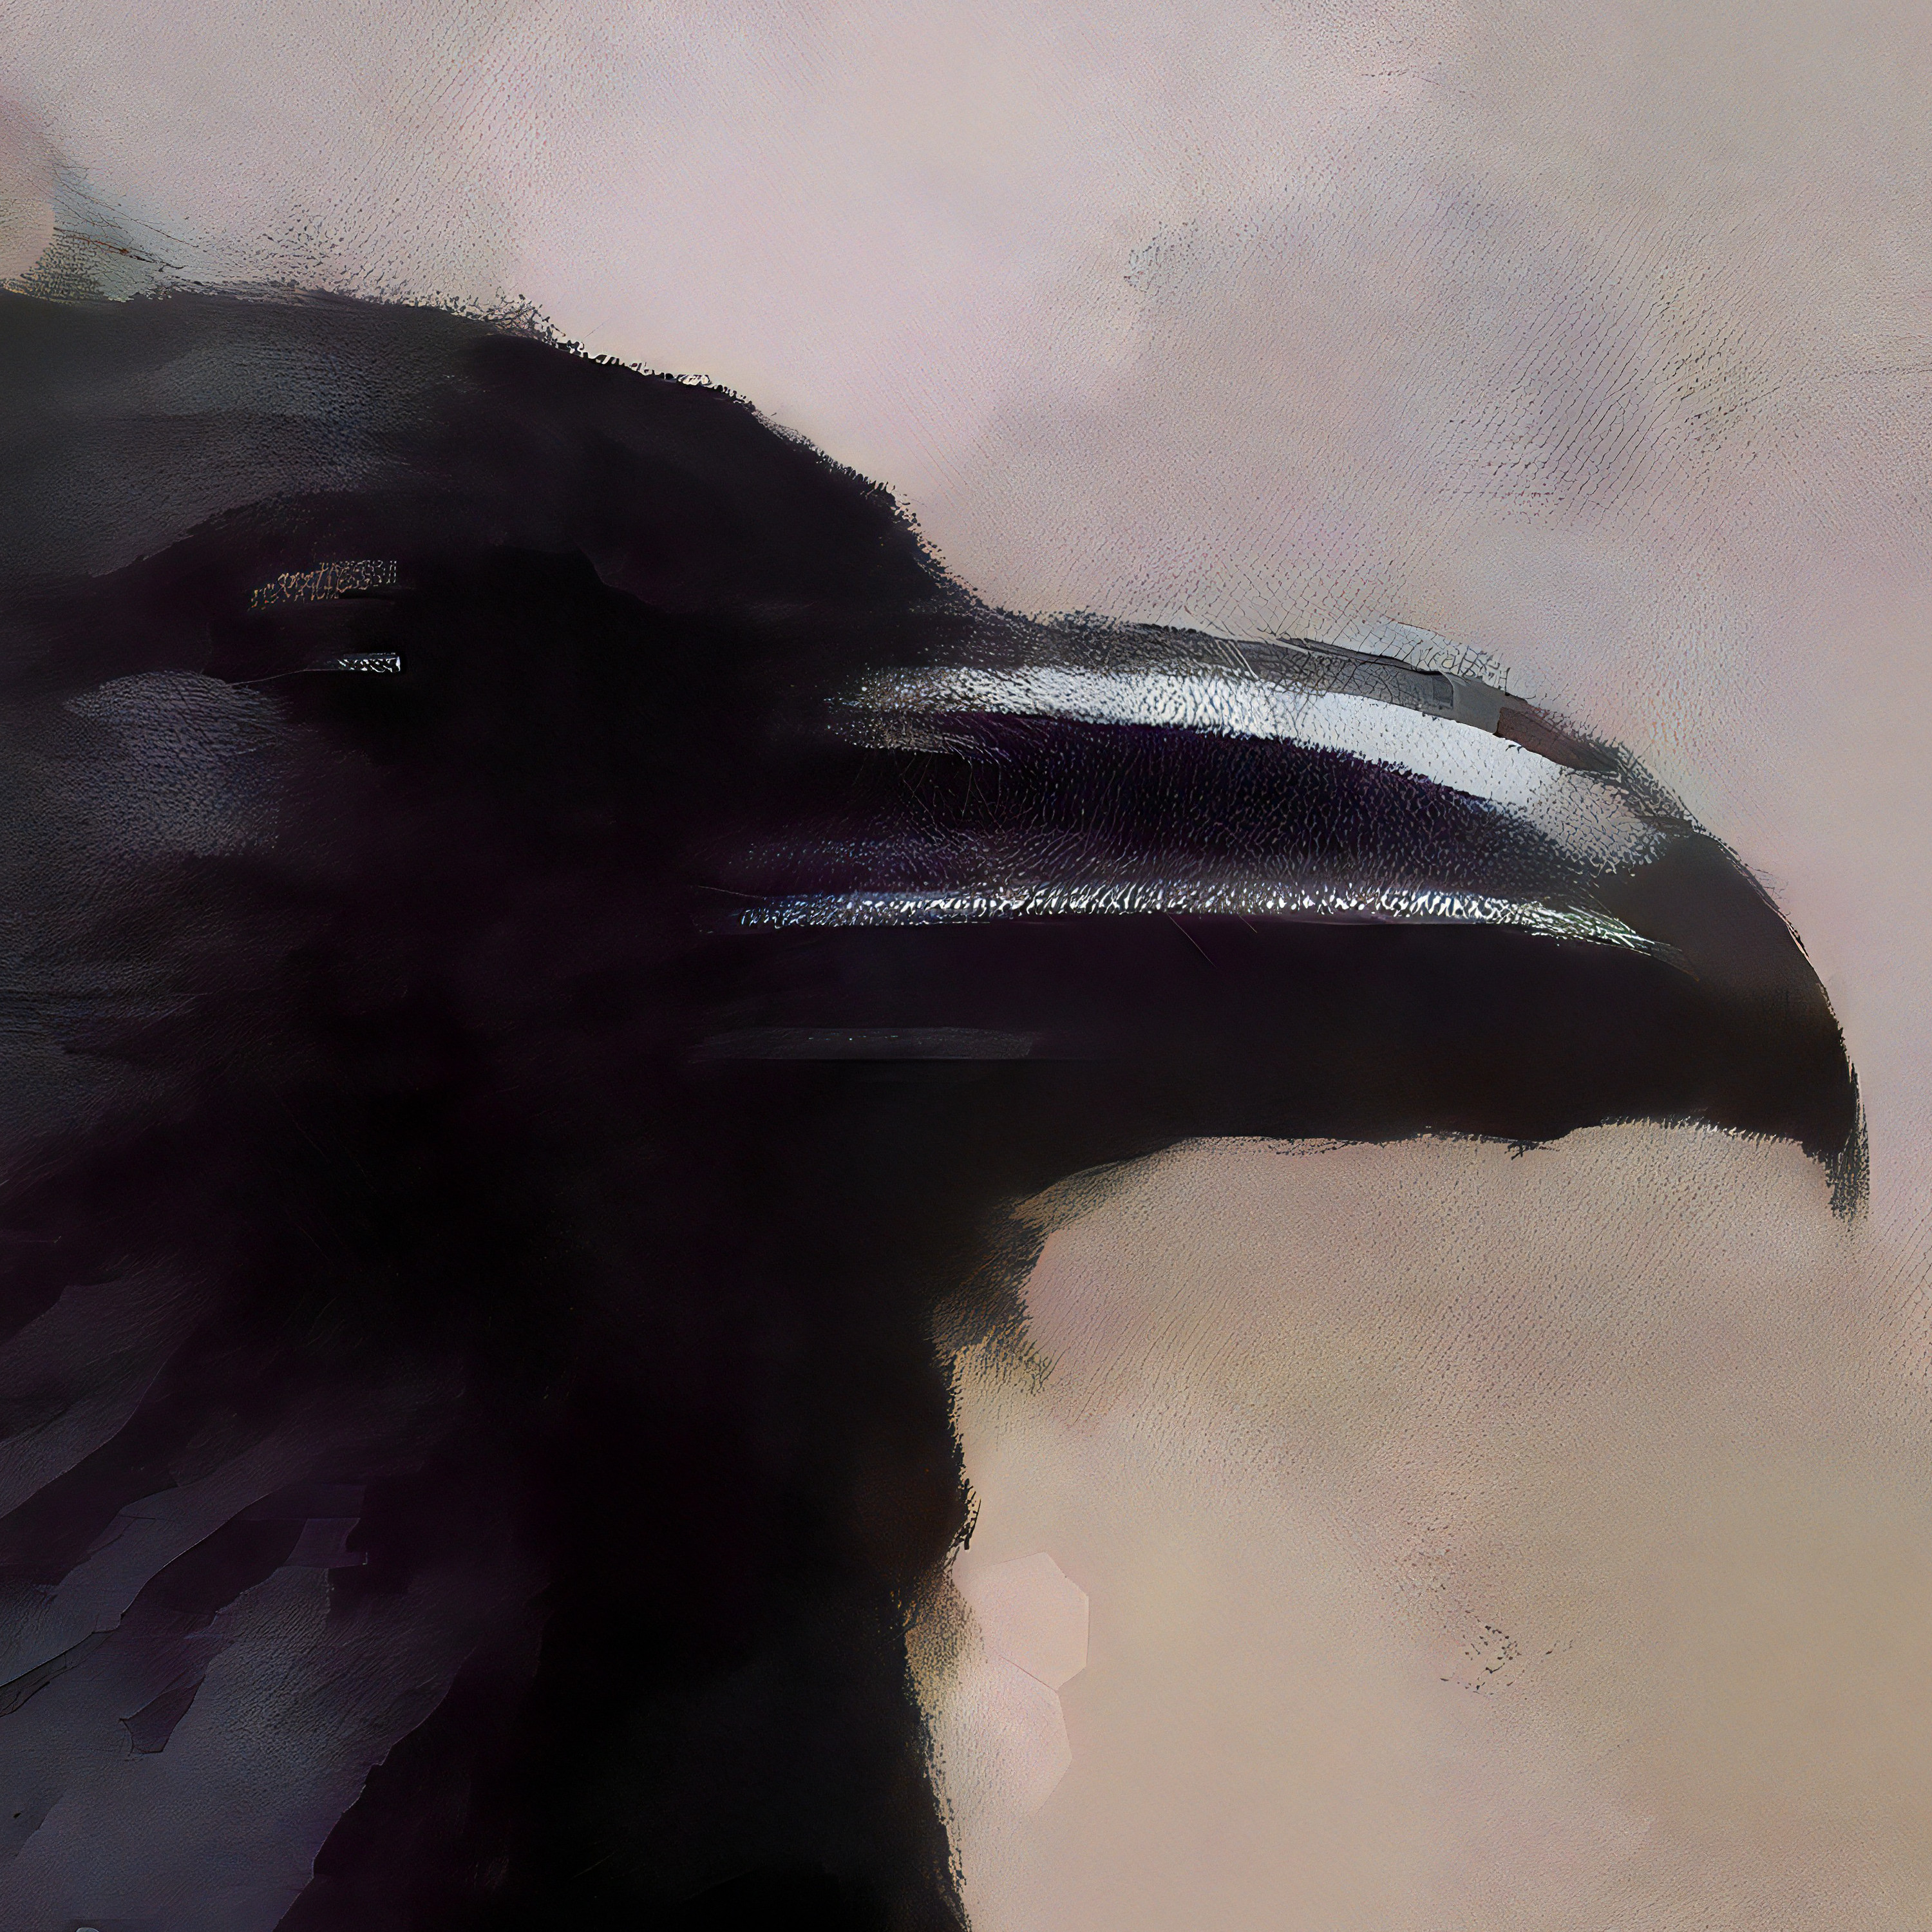 Raven in higher detail.